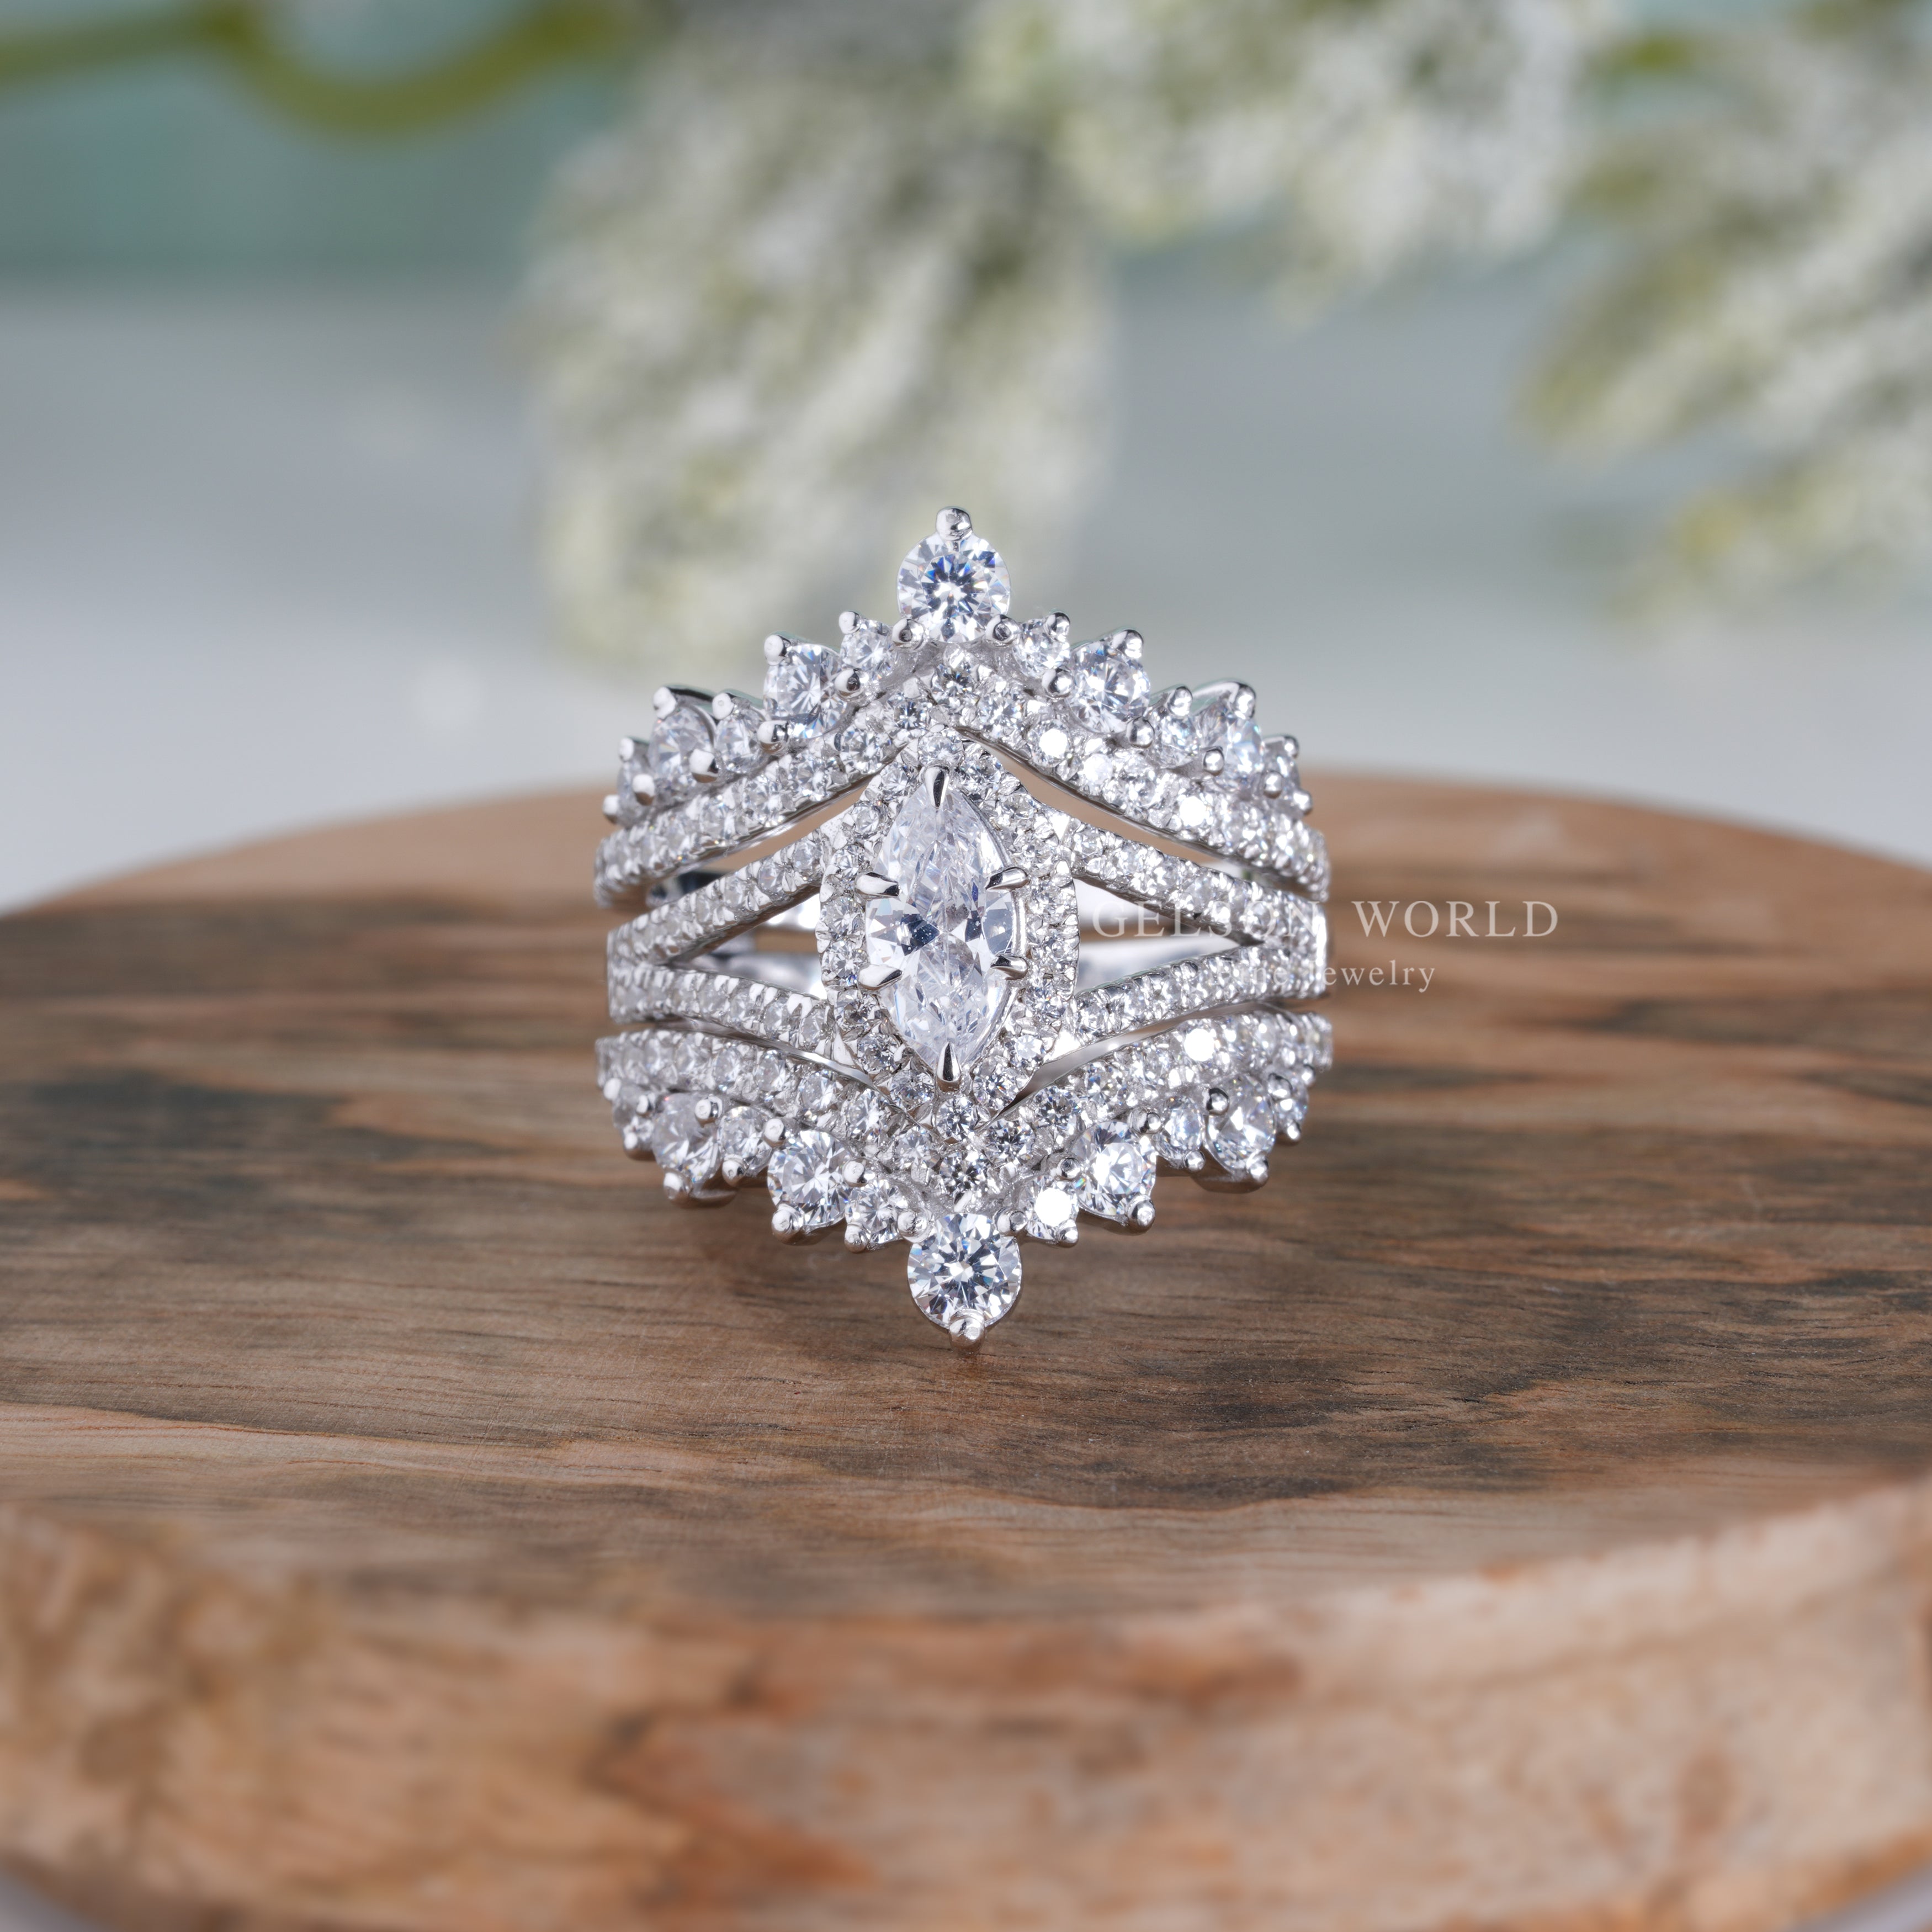 Art Deco Bridal Engagement Ring With Enhancer, Enhancer Wedding Ring Sets For Women